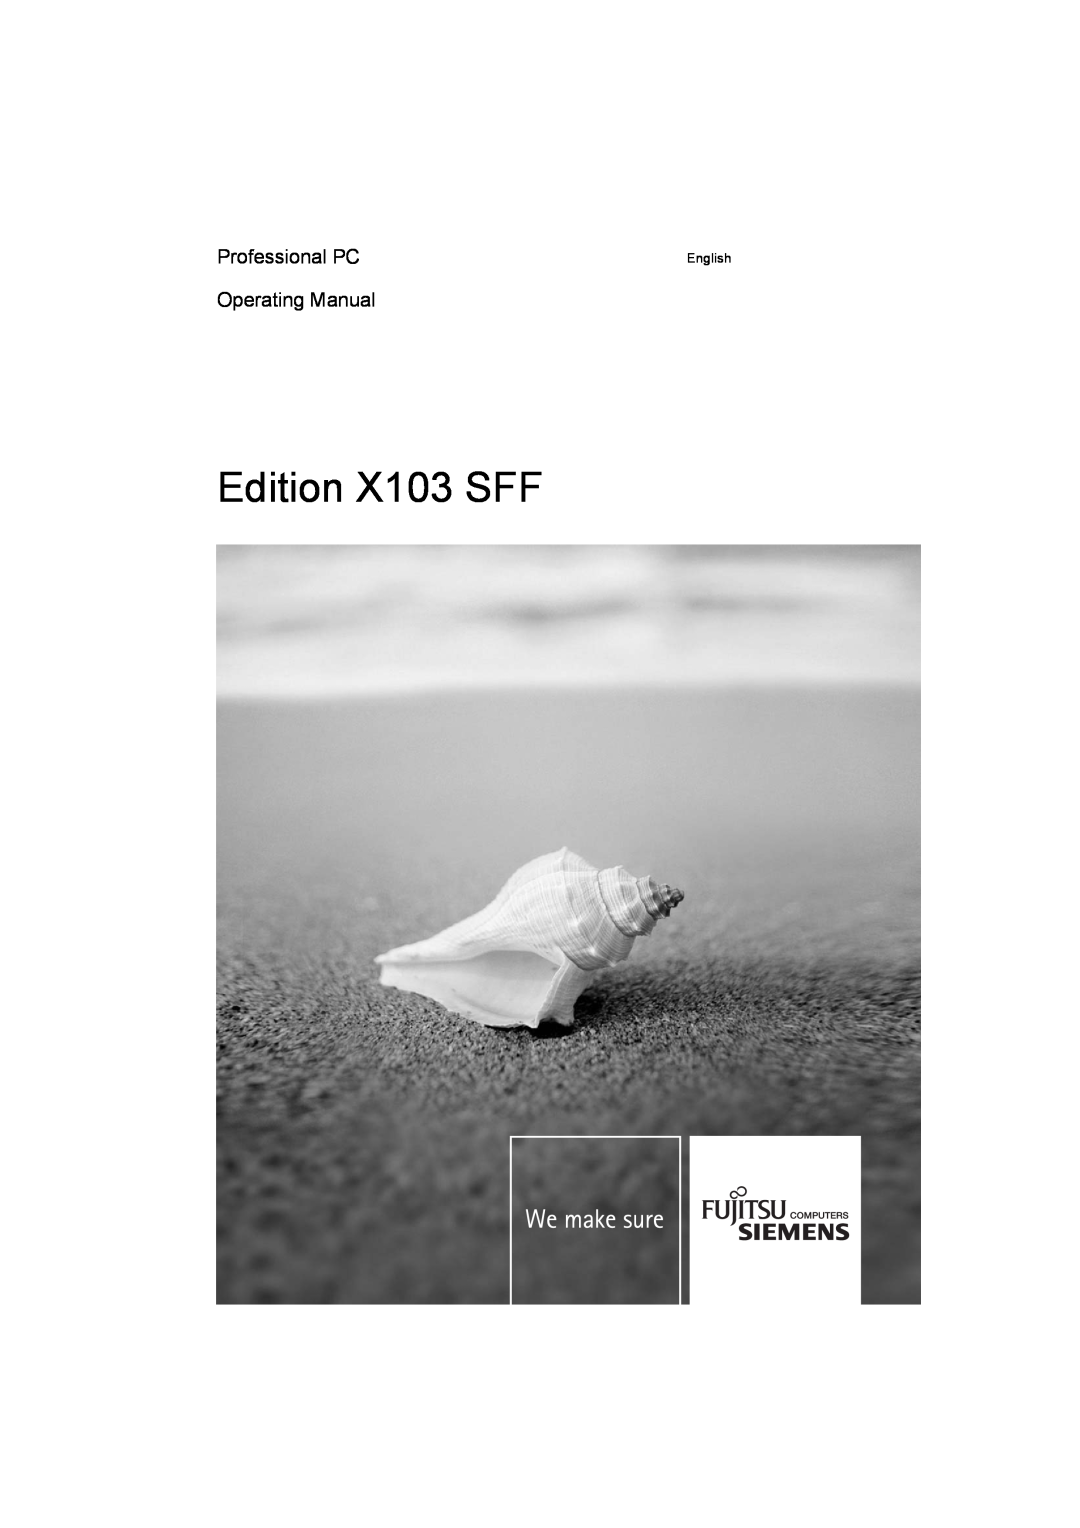 Fujitsu Siemens Computers manual Professional PC Operating Manual, Edition X103 SFF 